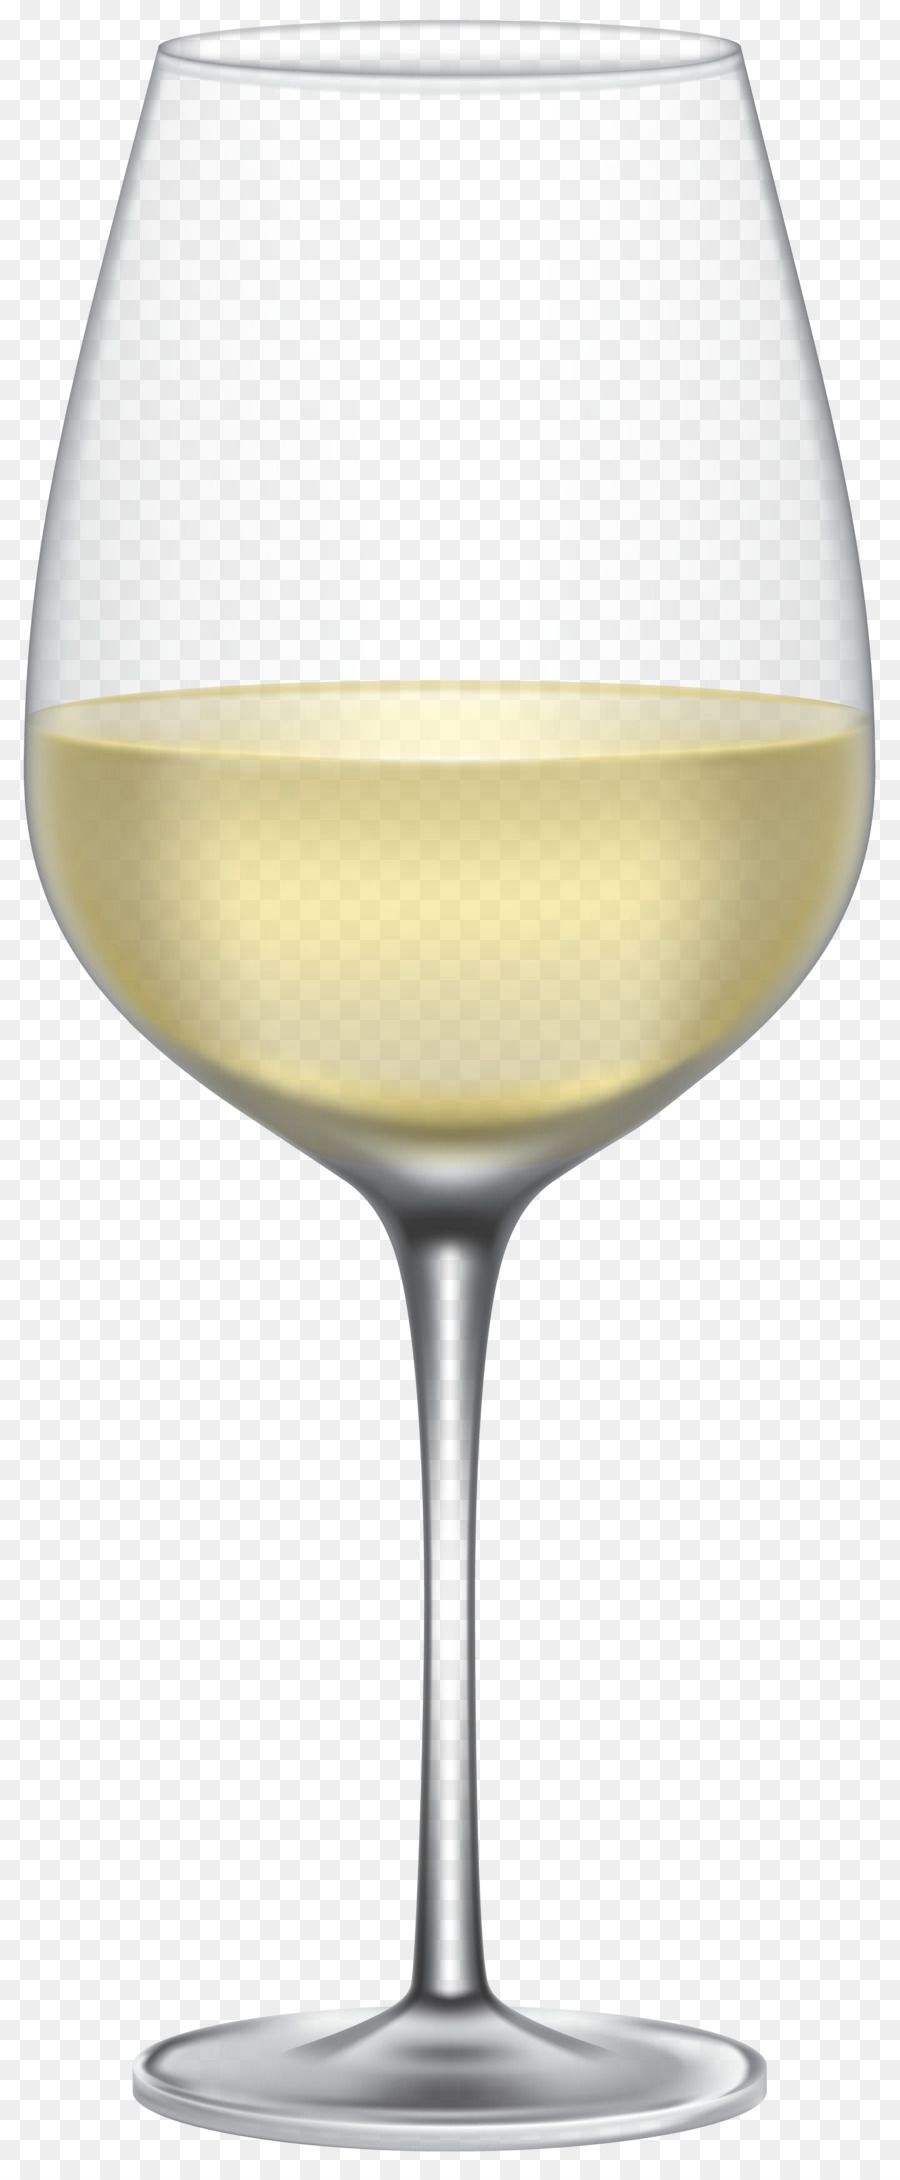 Wine glass Champagne White wine - Wineglass png download - 3329*8000 - Free Transparent Wine Glass png Download.